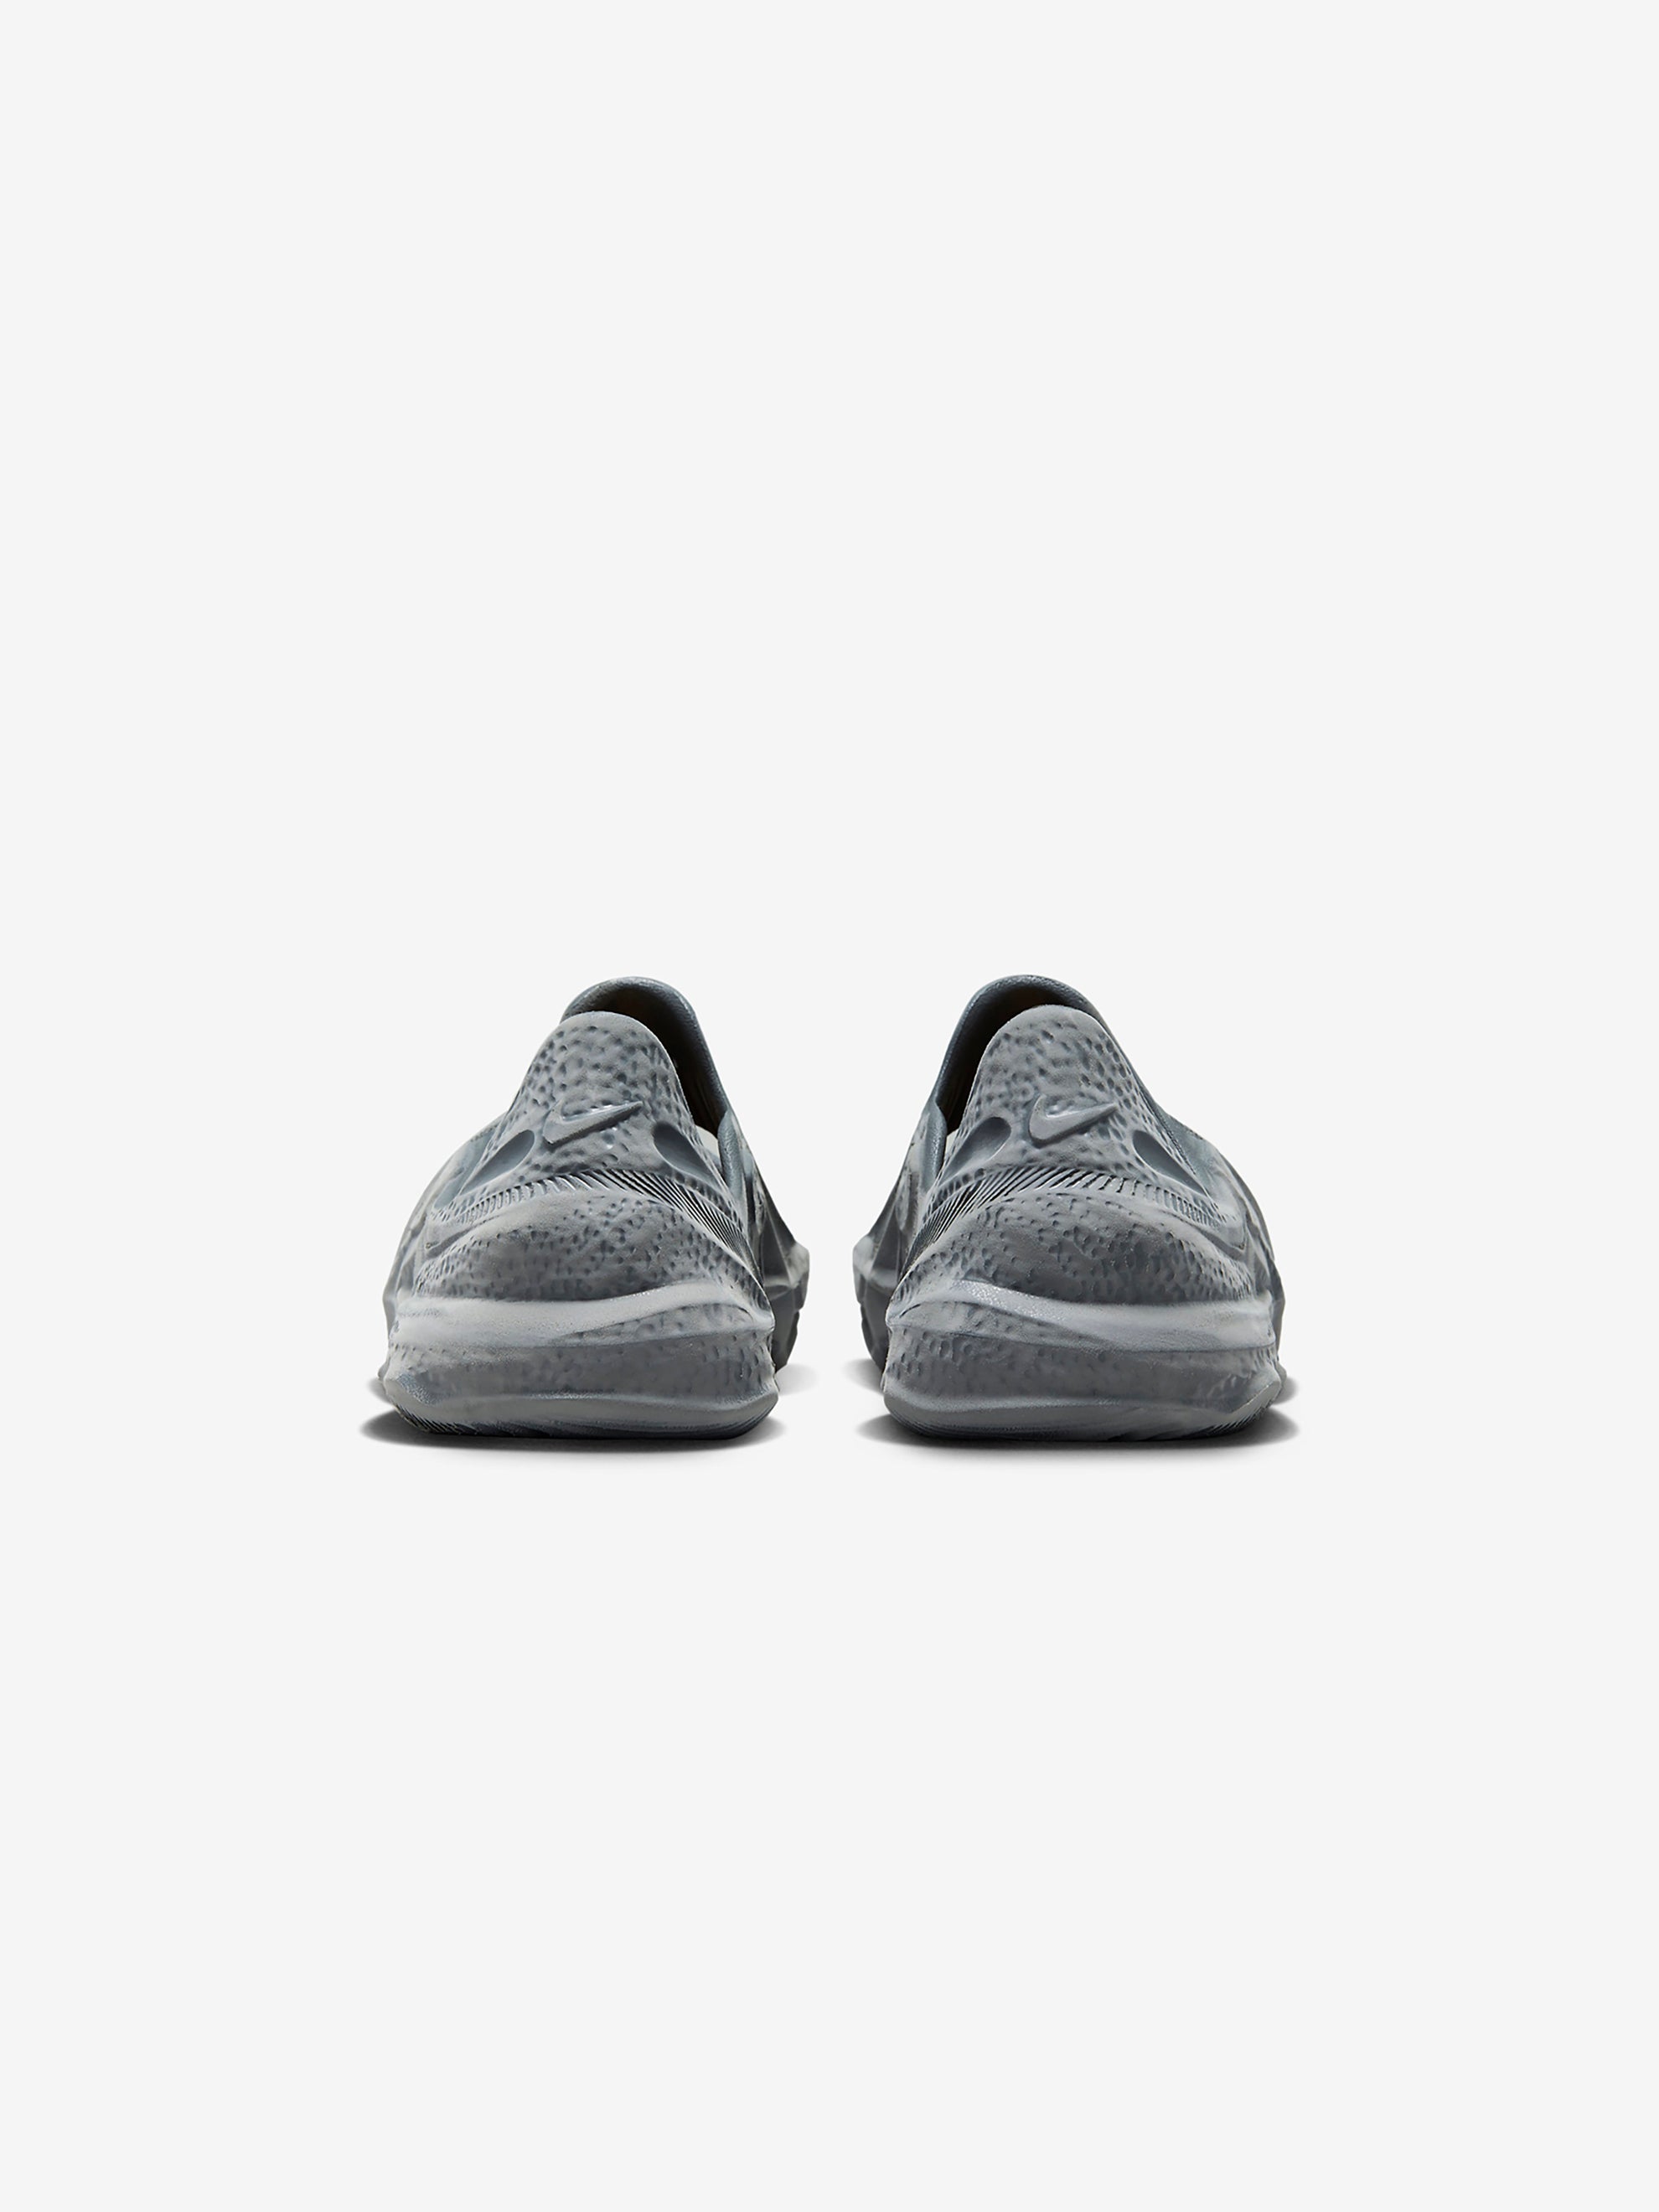 Nike ISPA Universal (Smoke Grey/Smoke Grey)